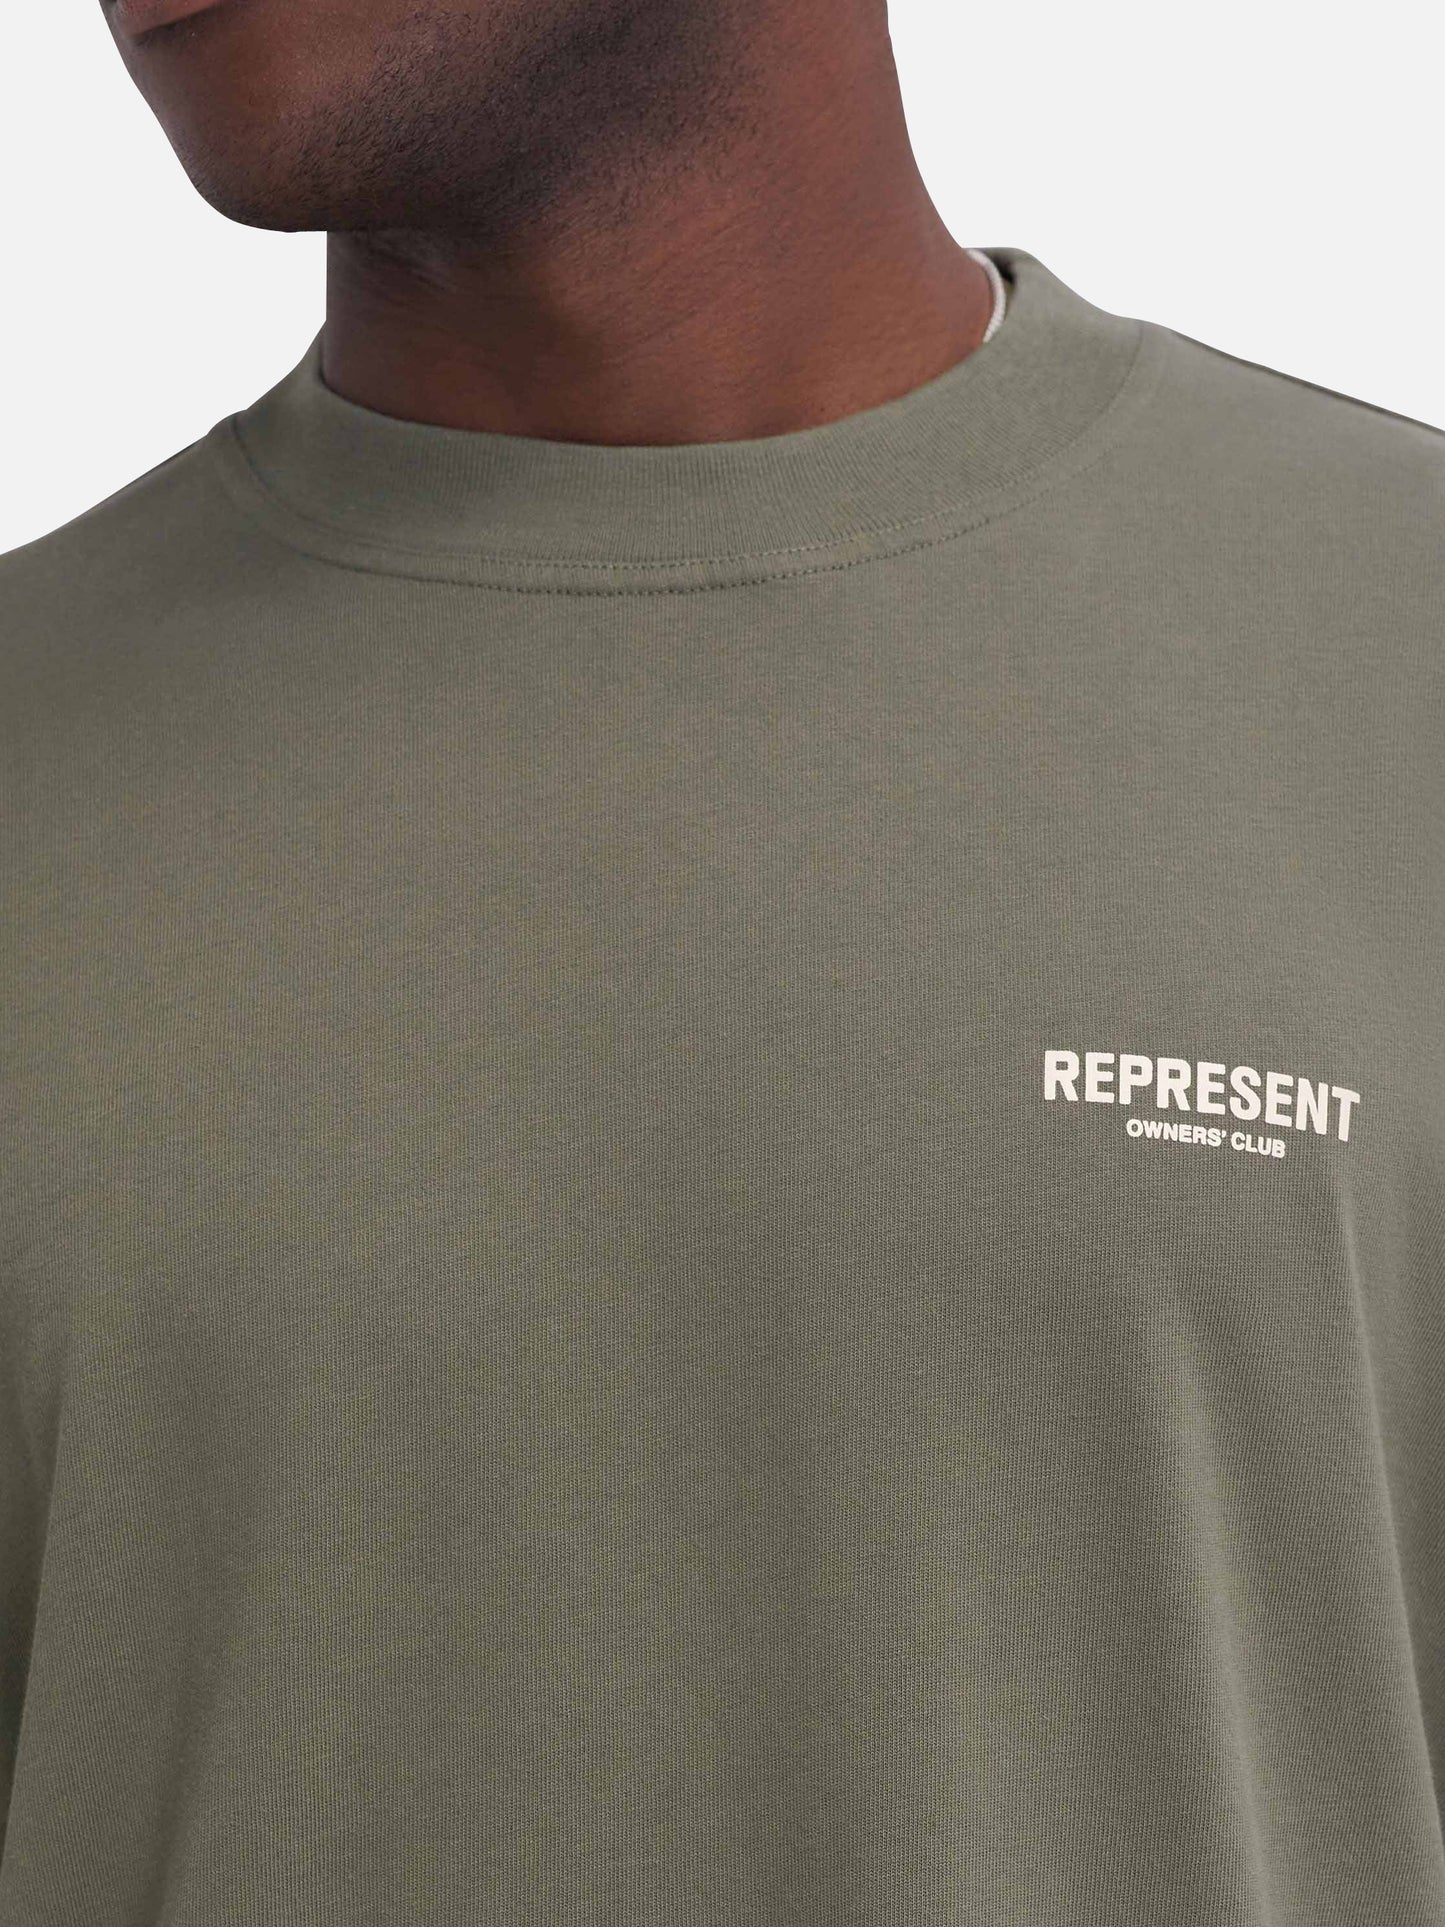 REPRESENT - Owner’s Club T-Shirt